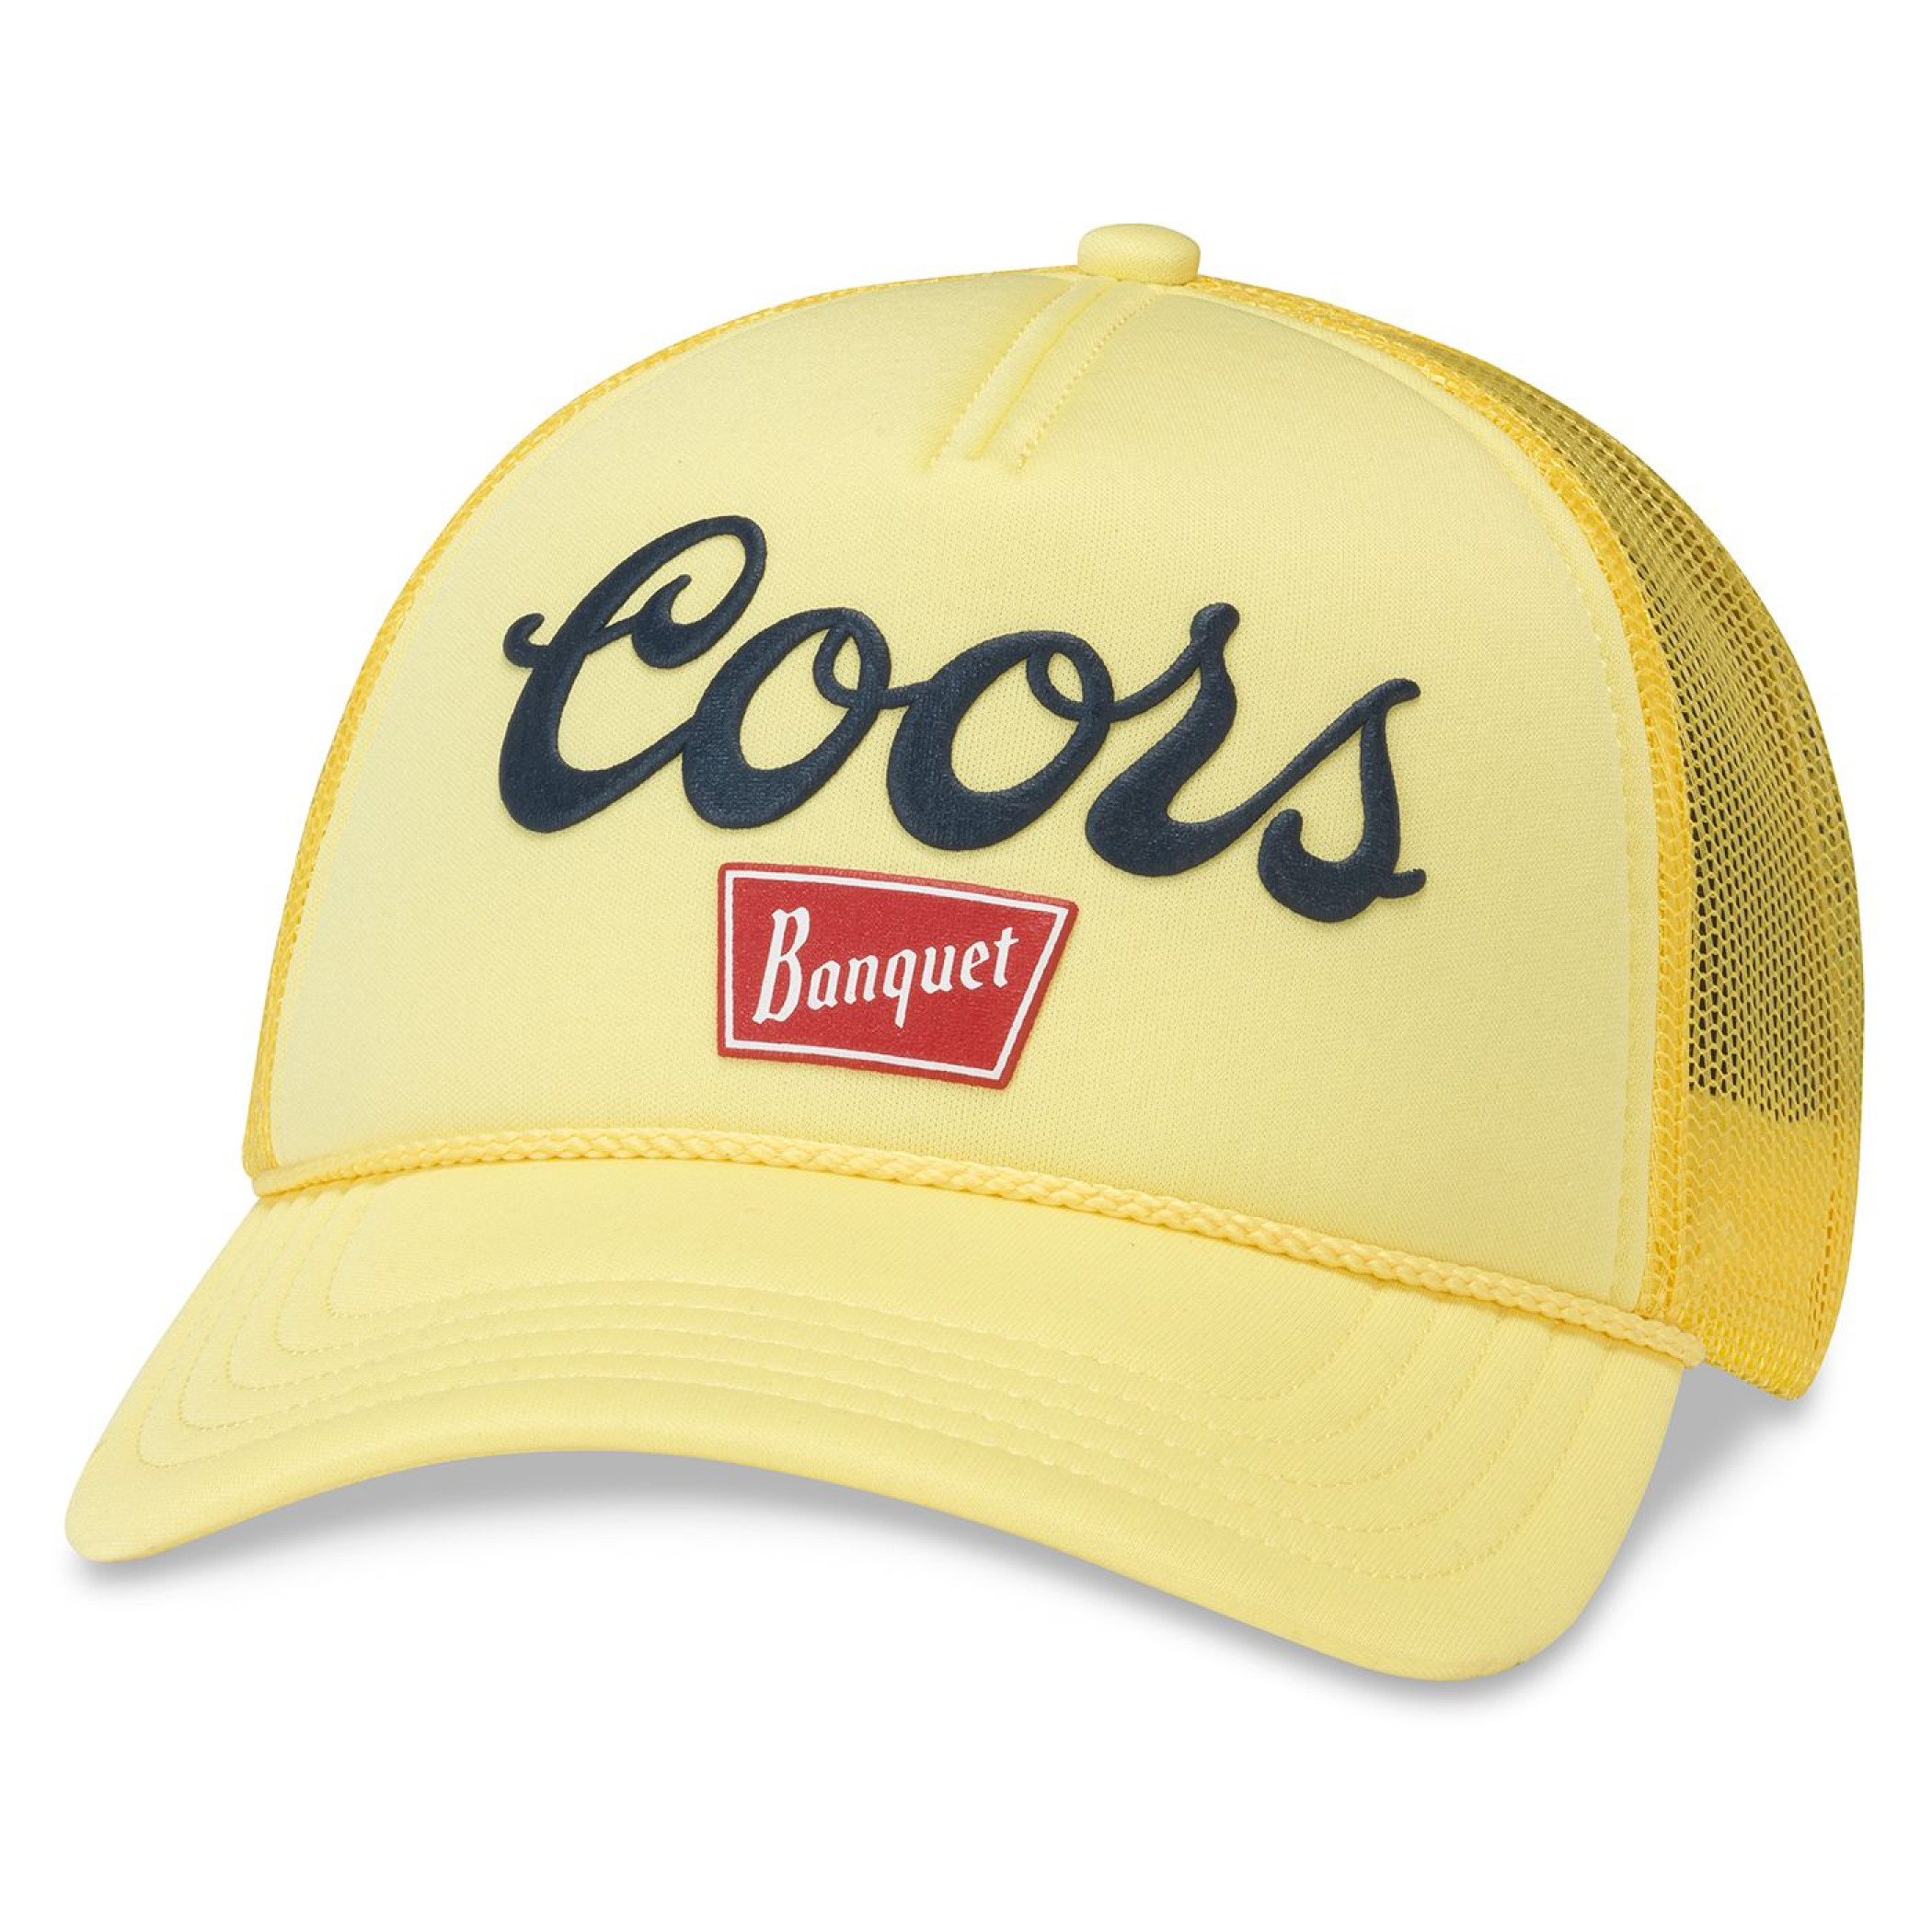 Coors Banquet Logo Foamy Valin Snapback Hat